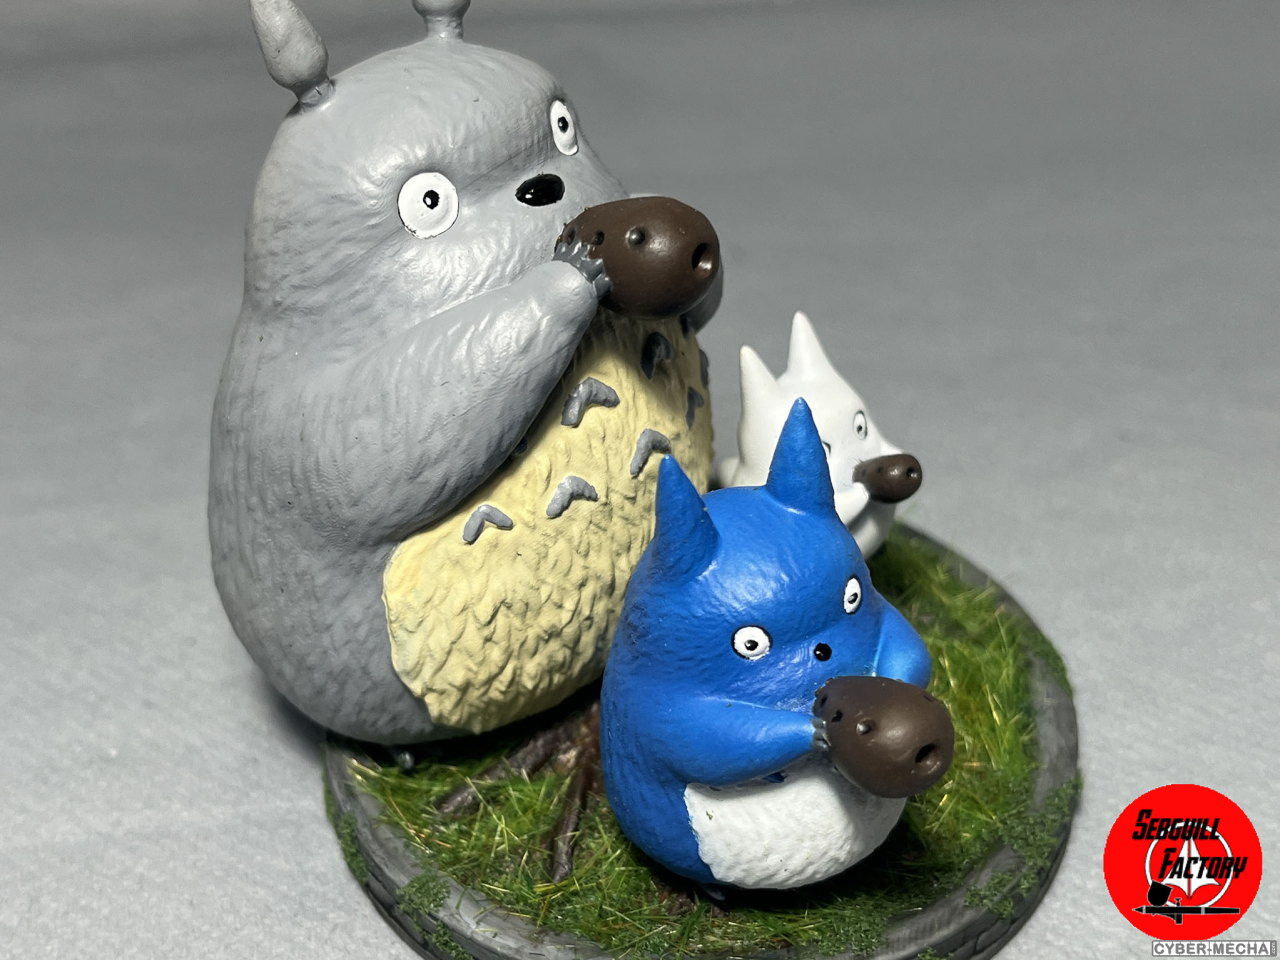 Print 3D : Totoro 1701076925